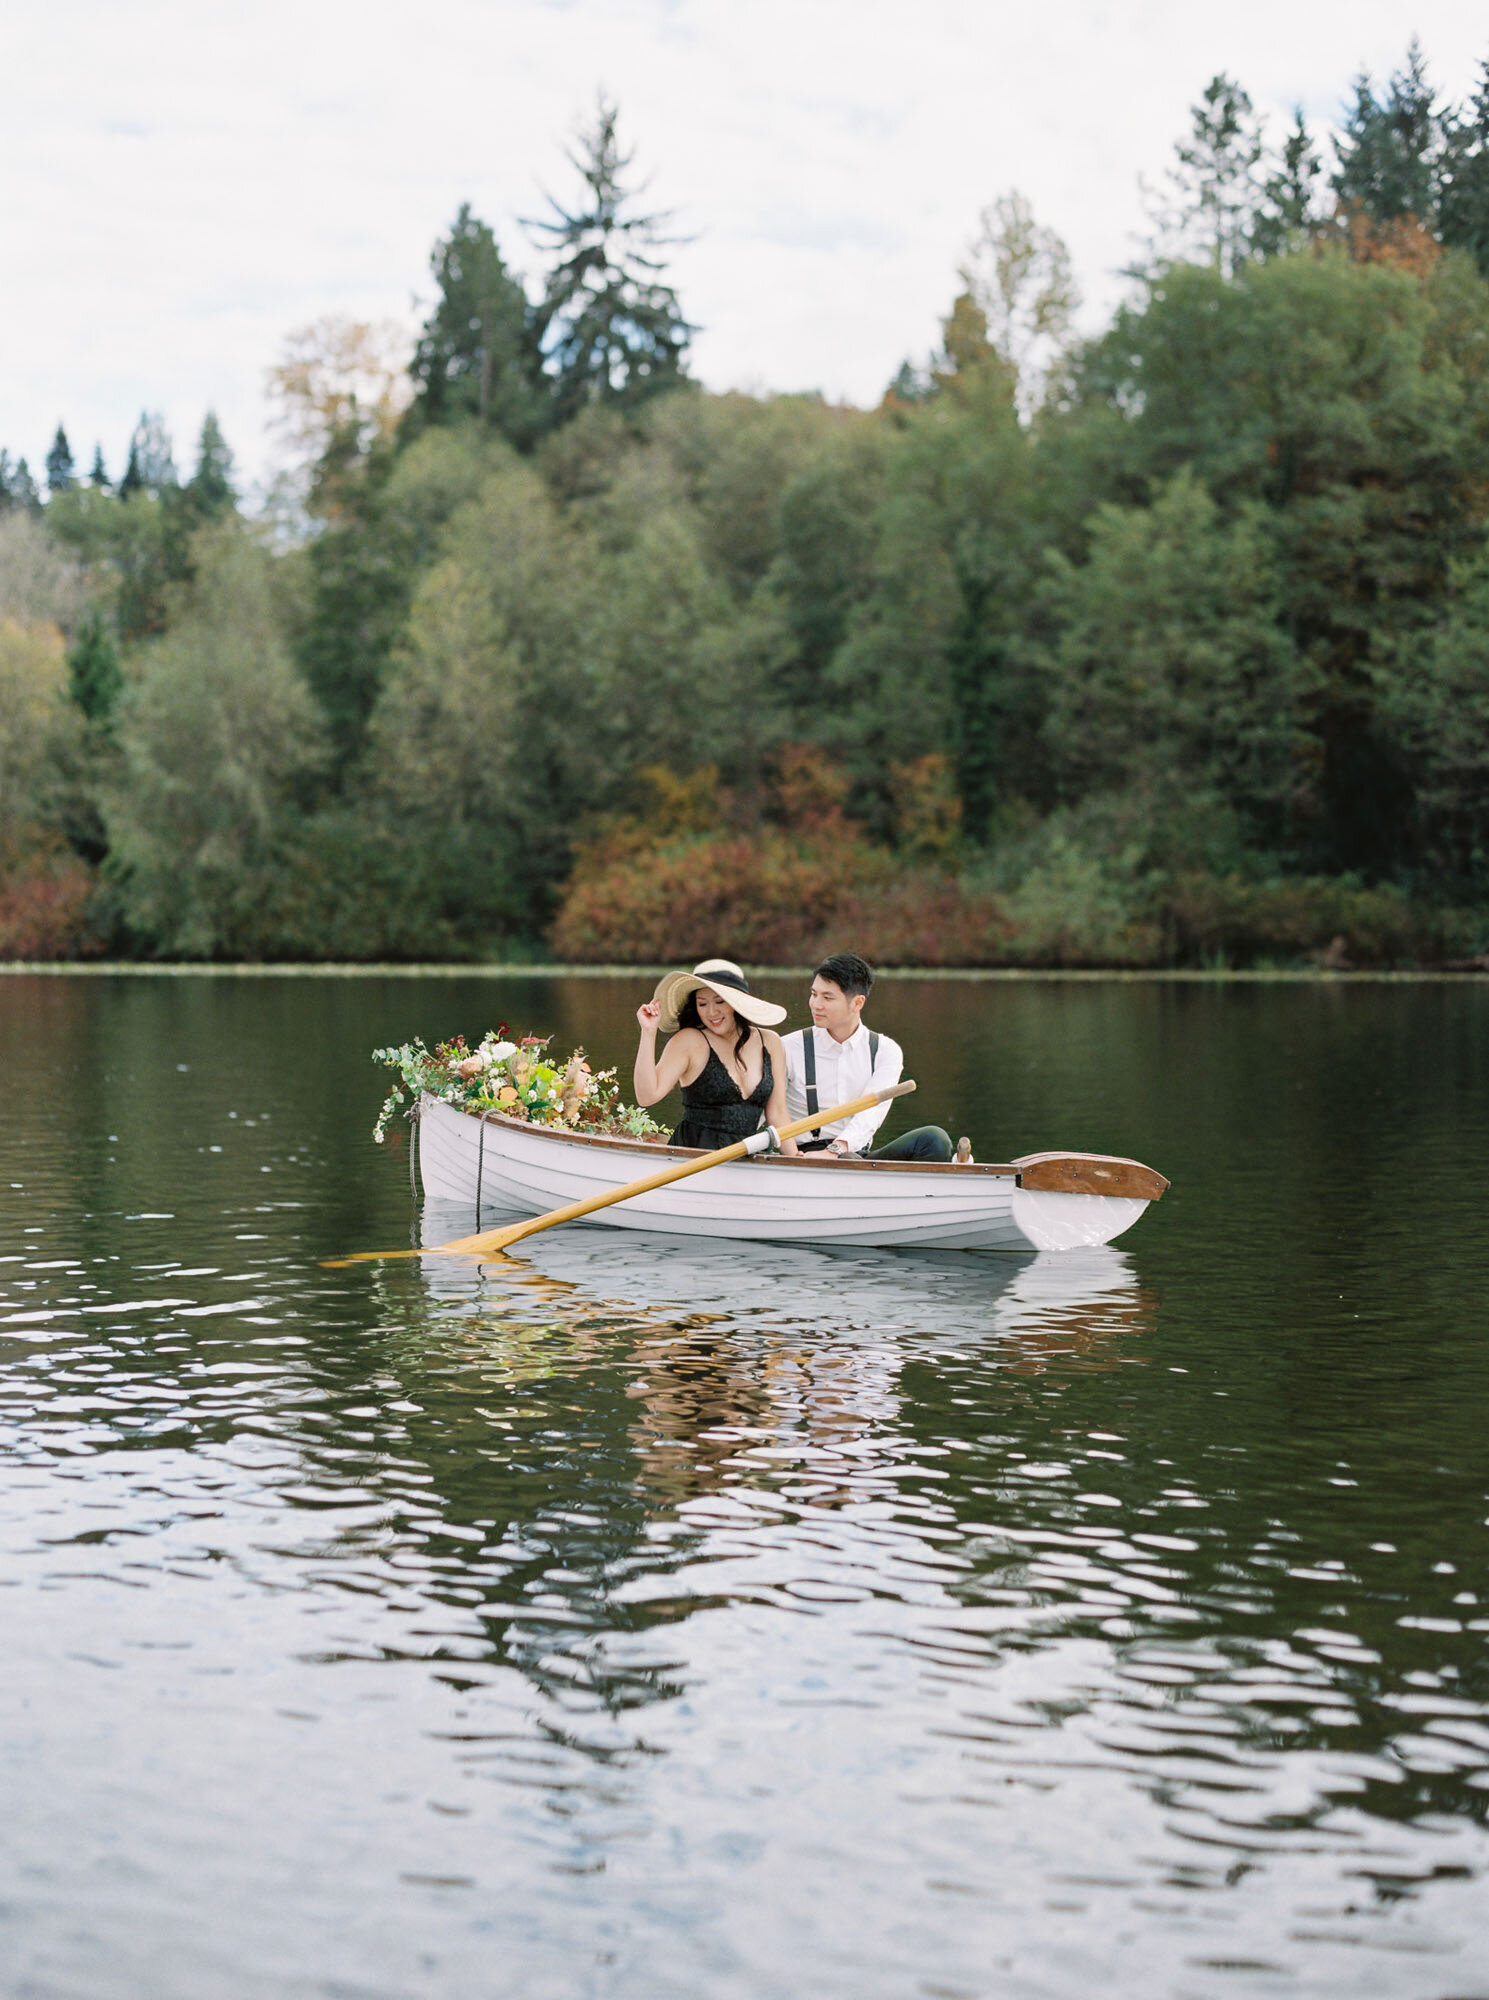 DeerLake+Boat+Engagement+Saminphotography+45.jpg